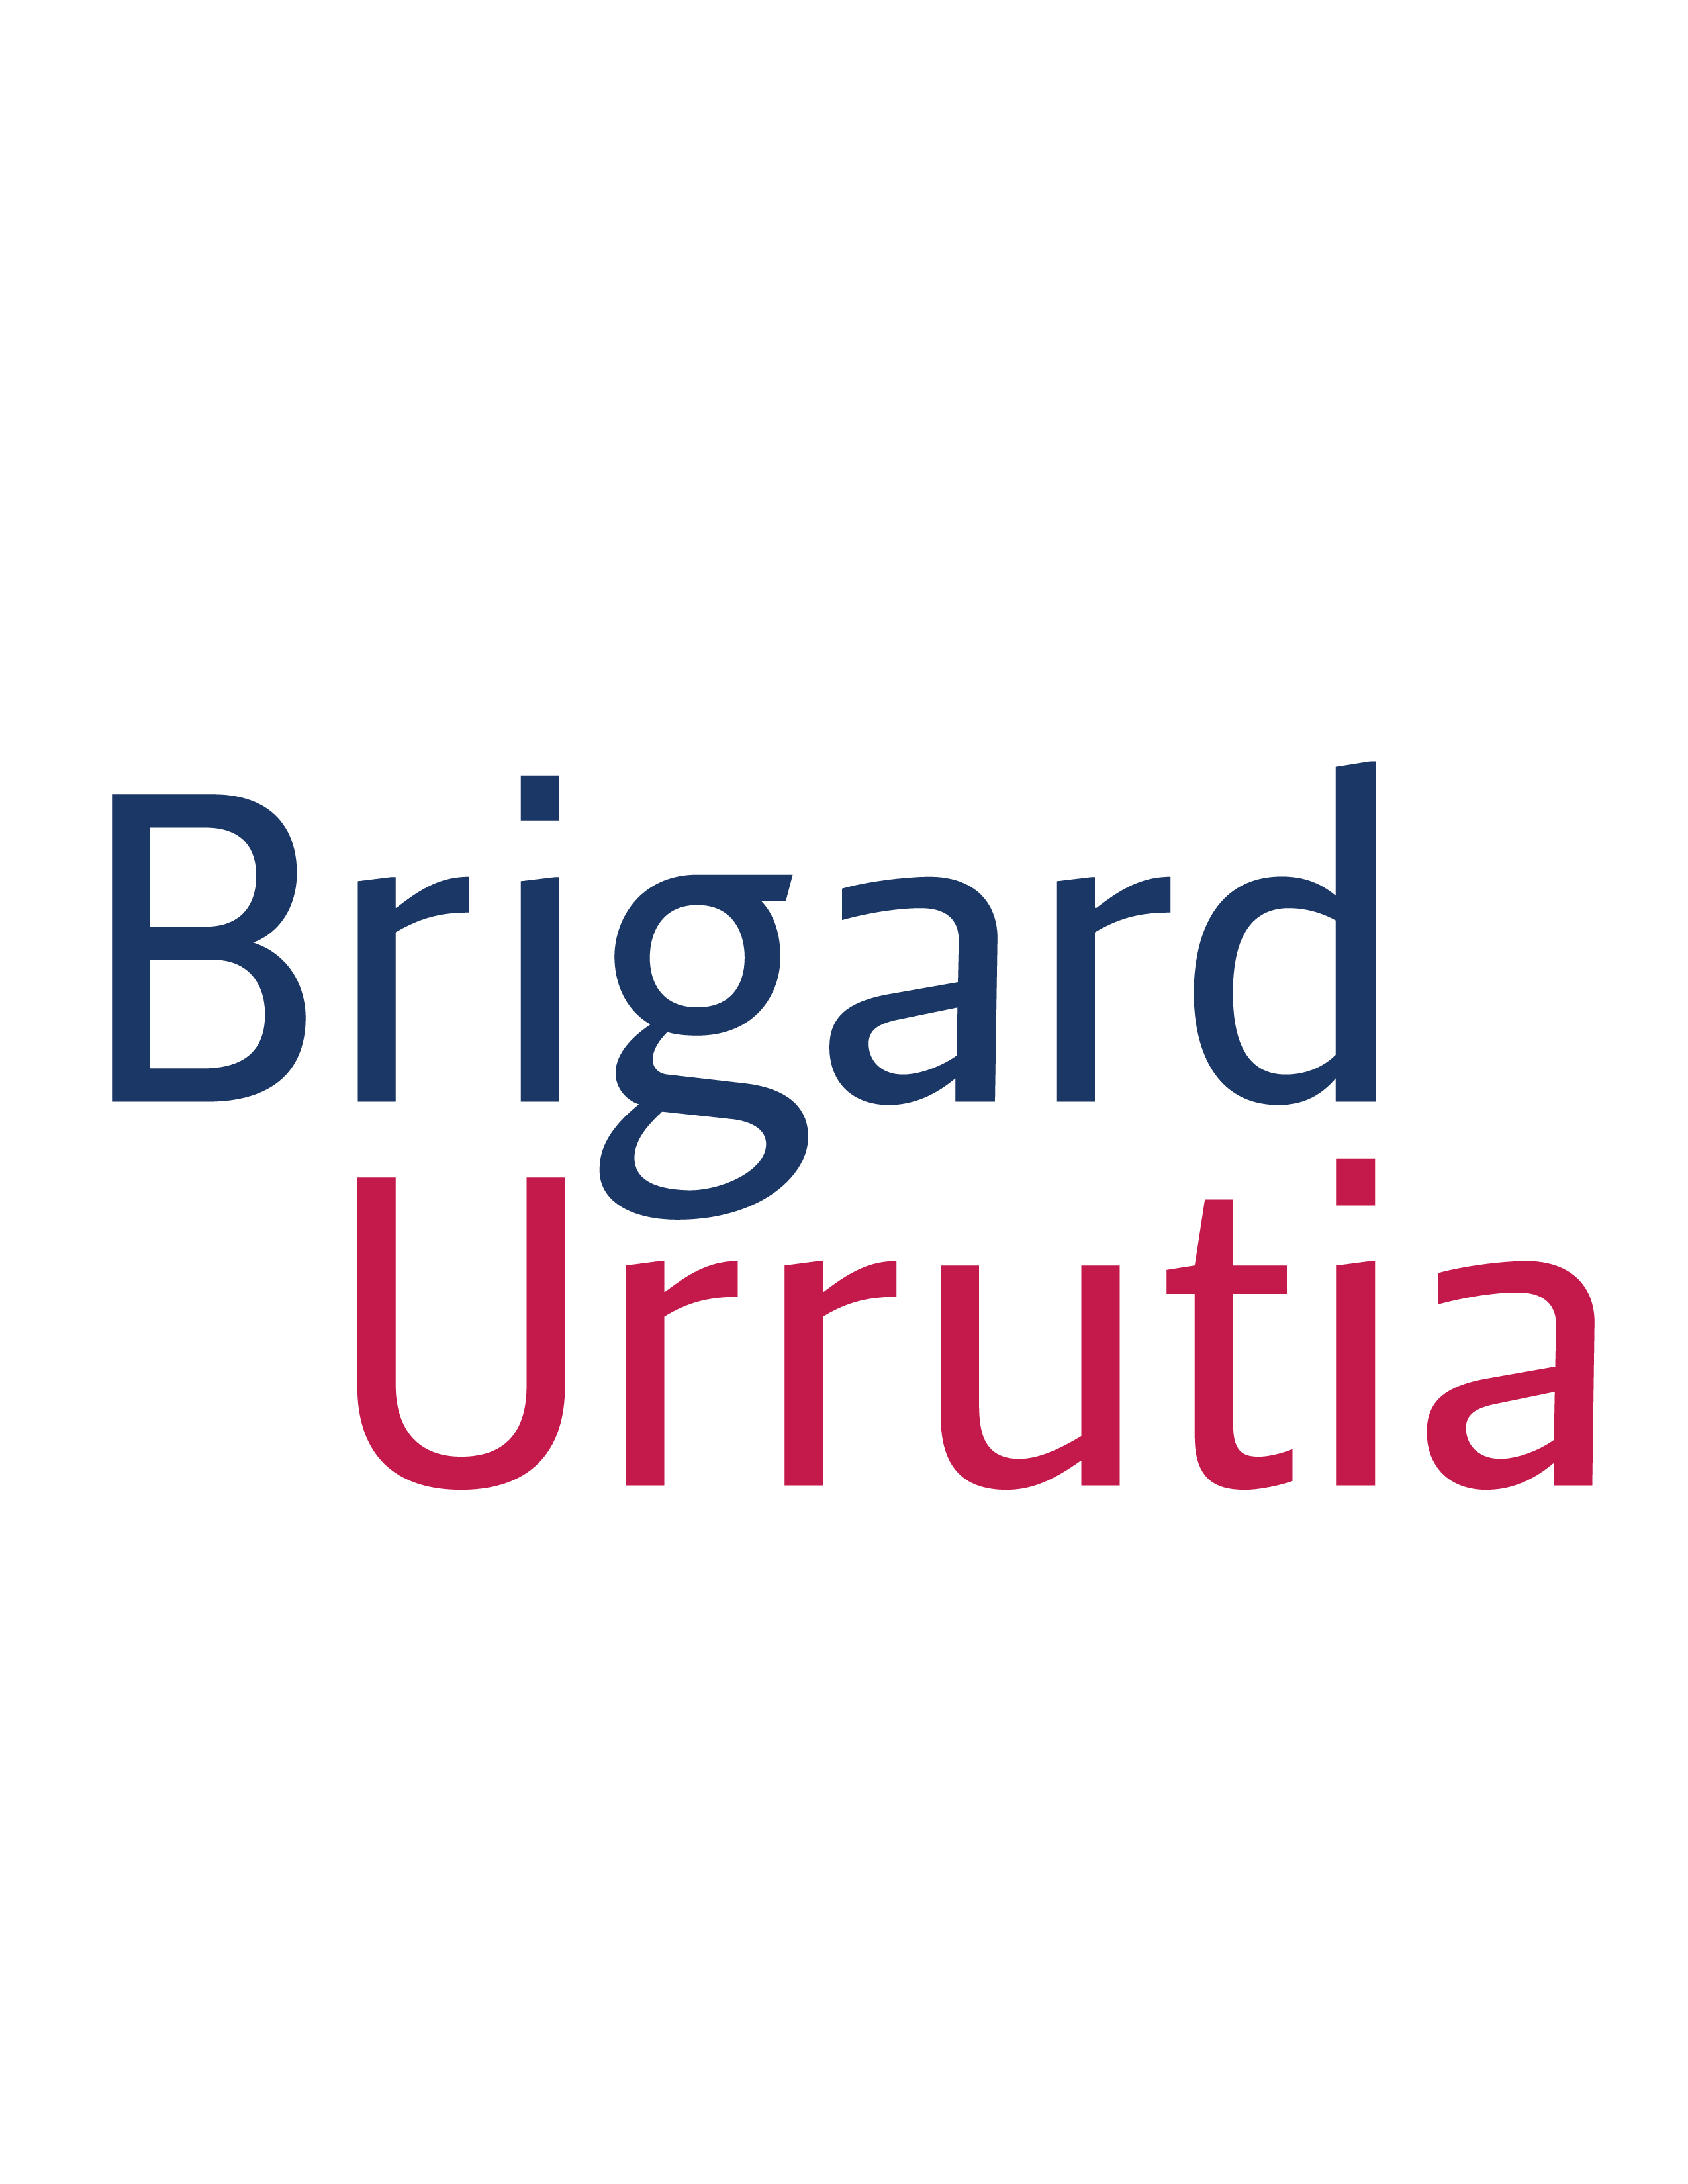 Brigard Urrutia